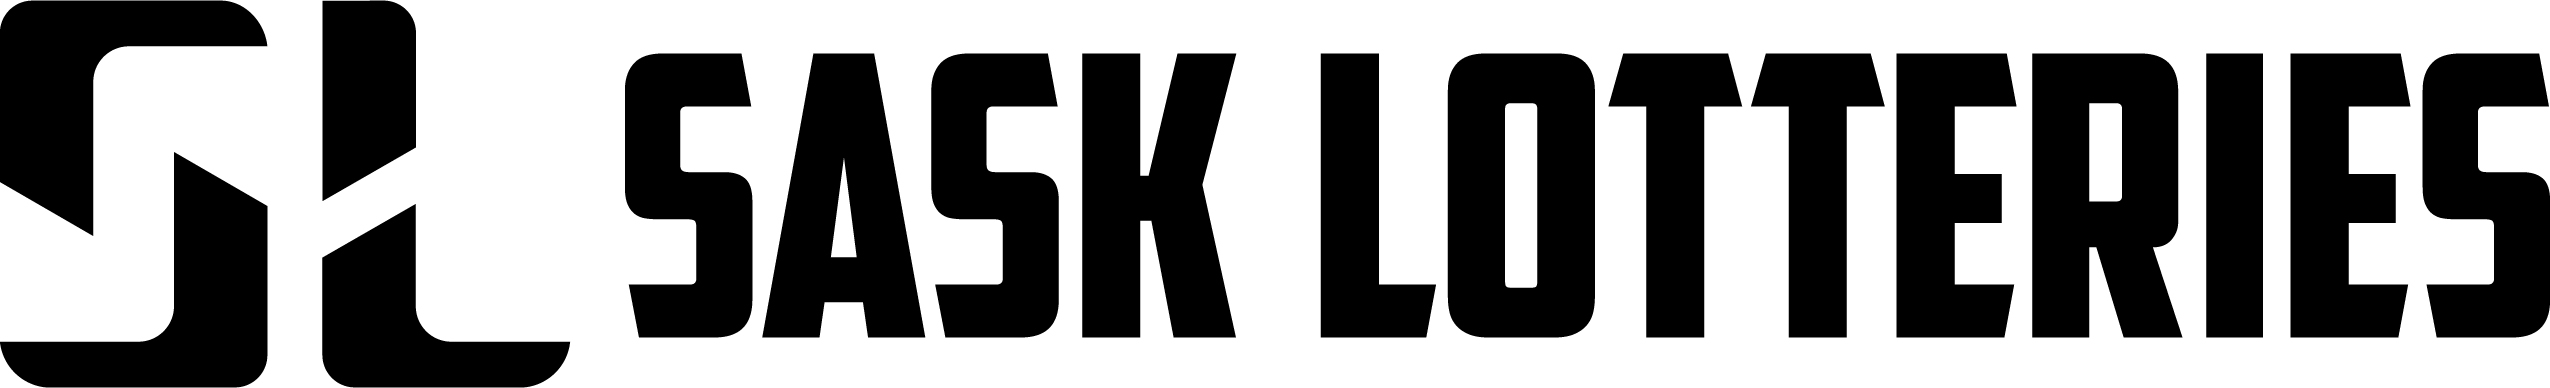 SaskCulture/Saskatchewan Lotteries Logo - Black and White